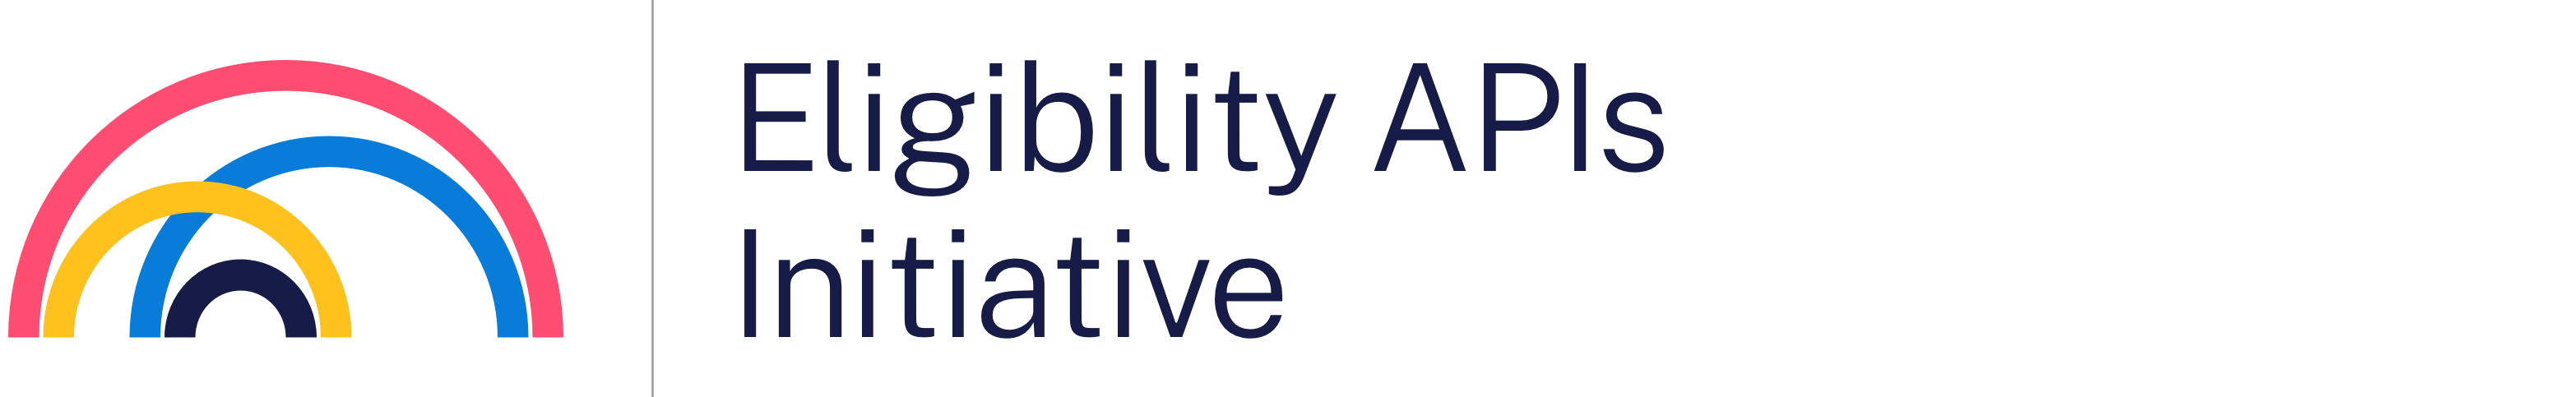 Eligibility APIs Initiative logo